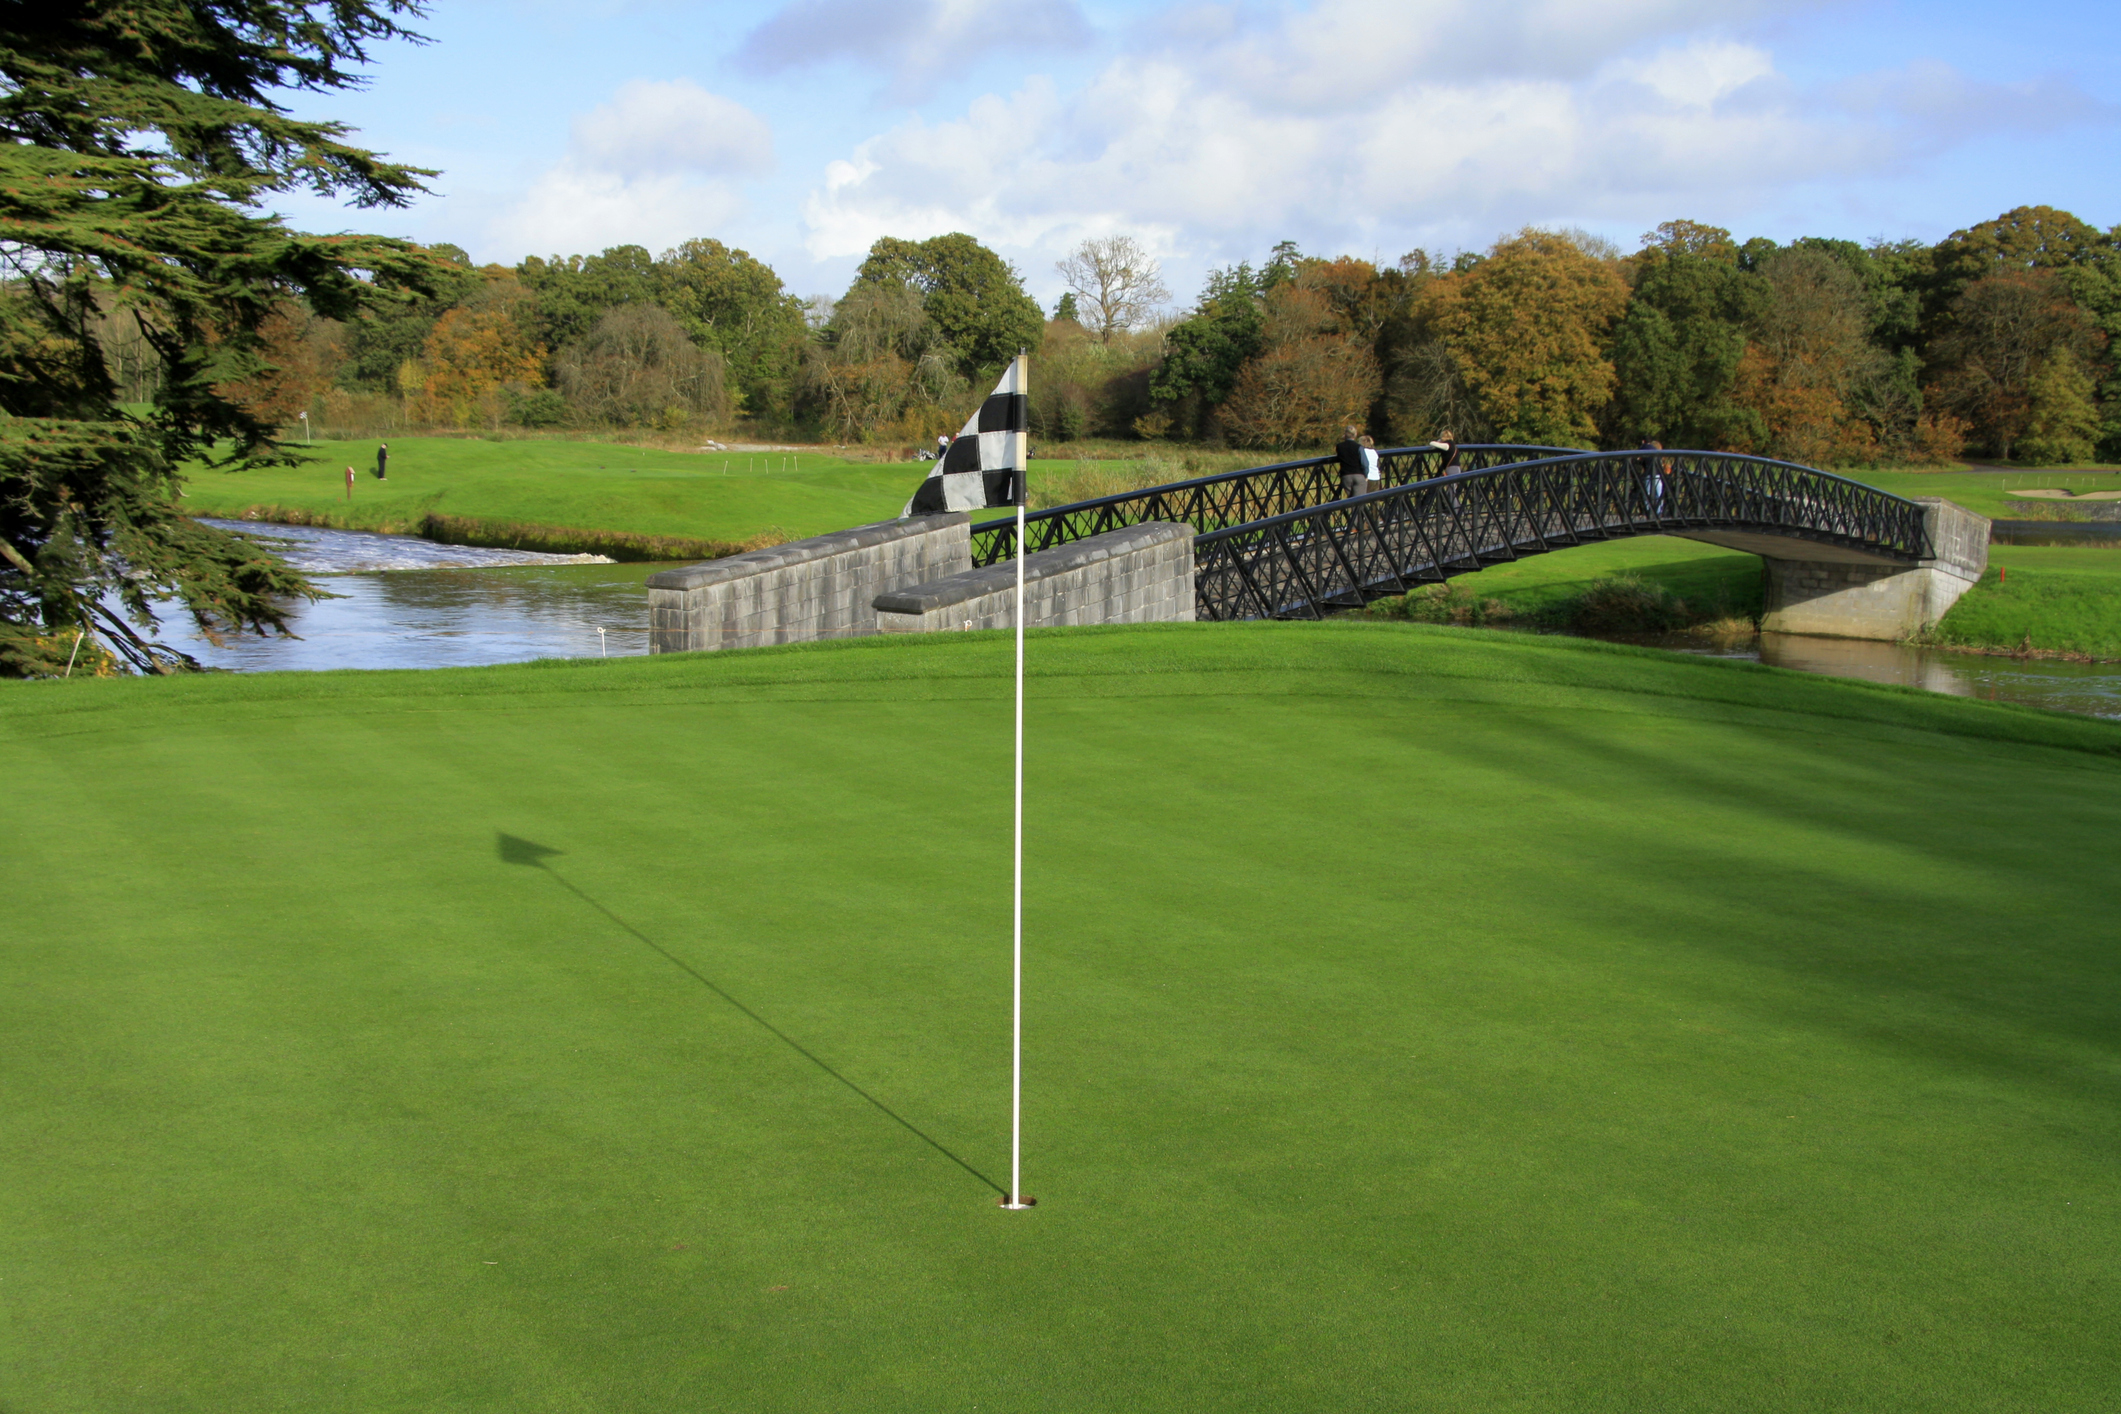 Golf course in Adare, Ireland